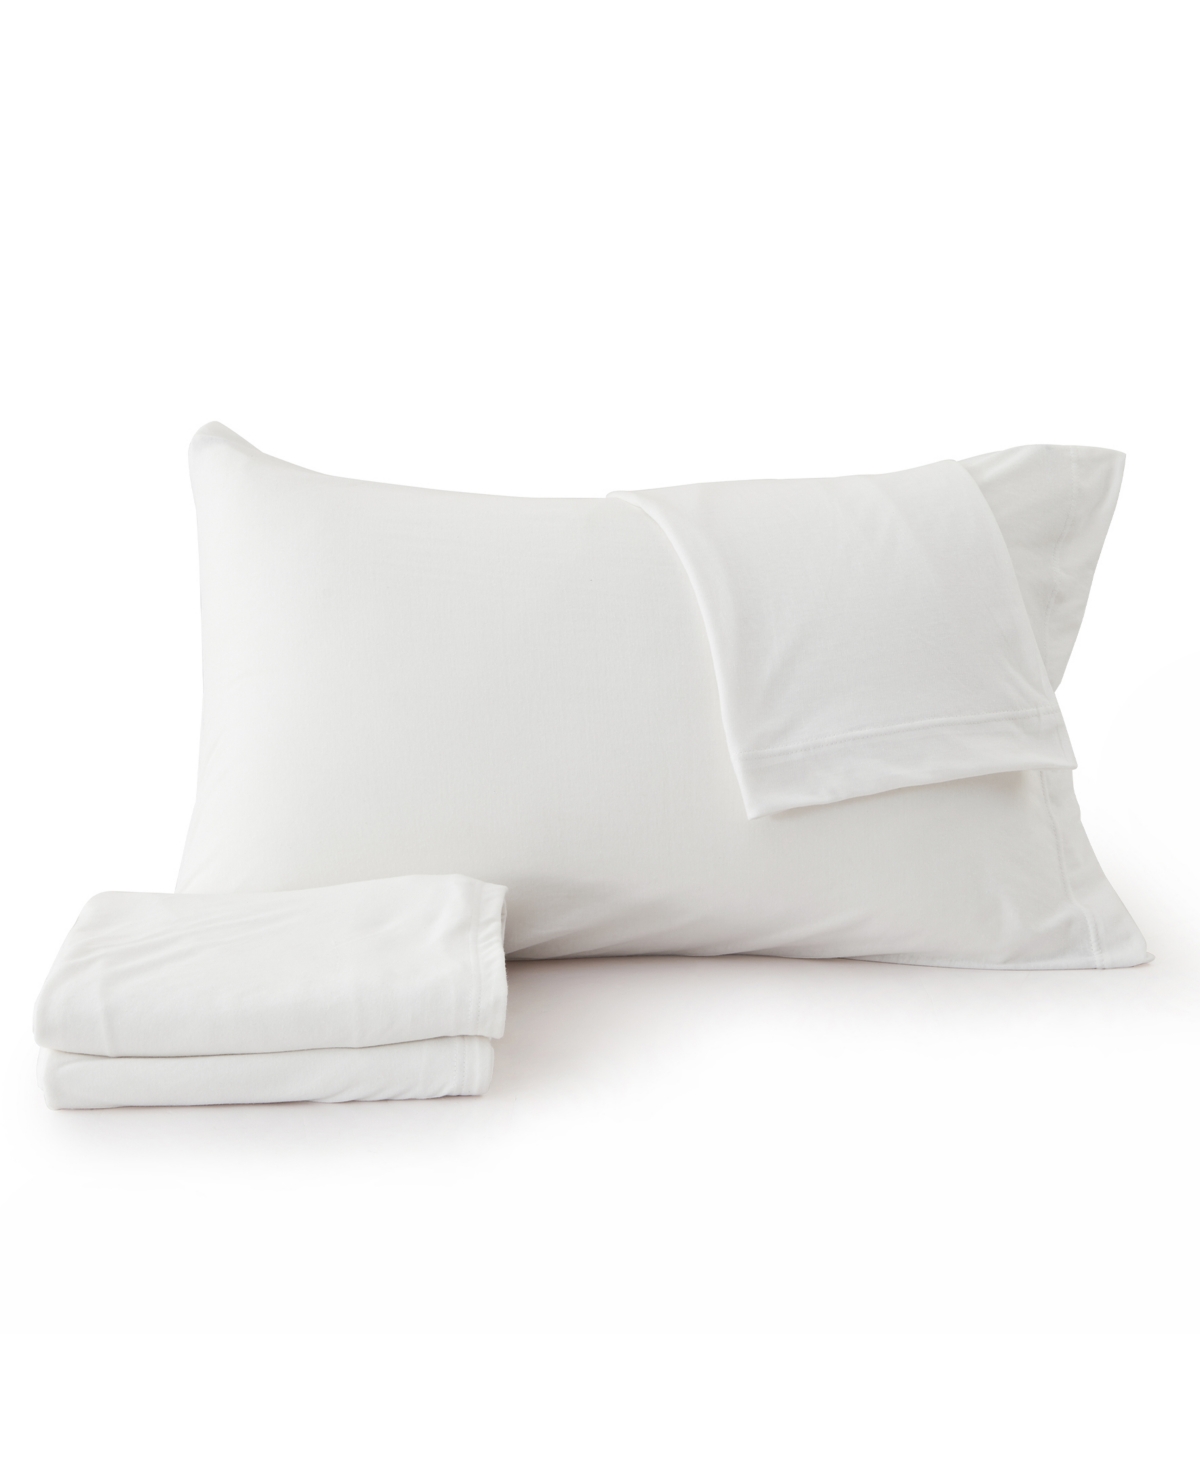 Premium Comforts Heathered Melange T-shirt Jersey Knit Cotton Blend 4 Piece Sheet Set, California King In Winter White